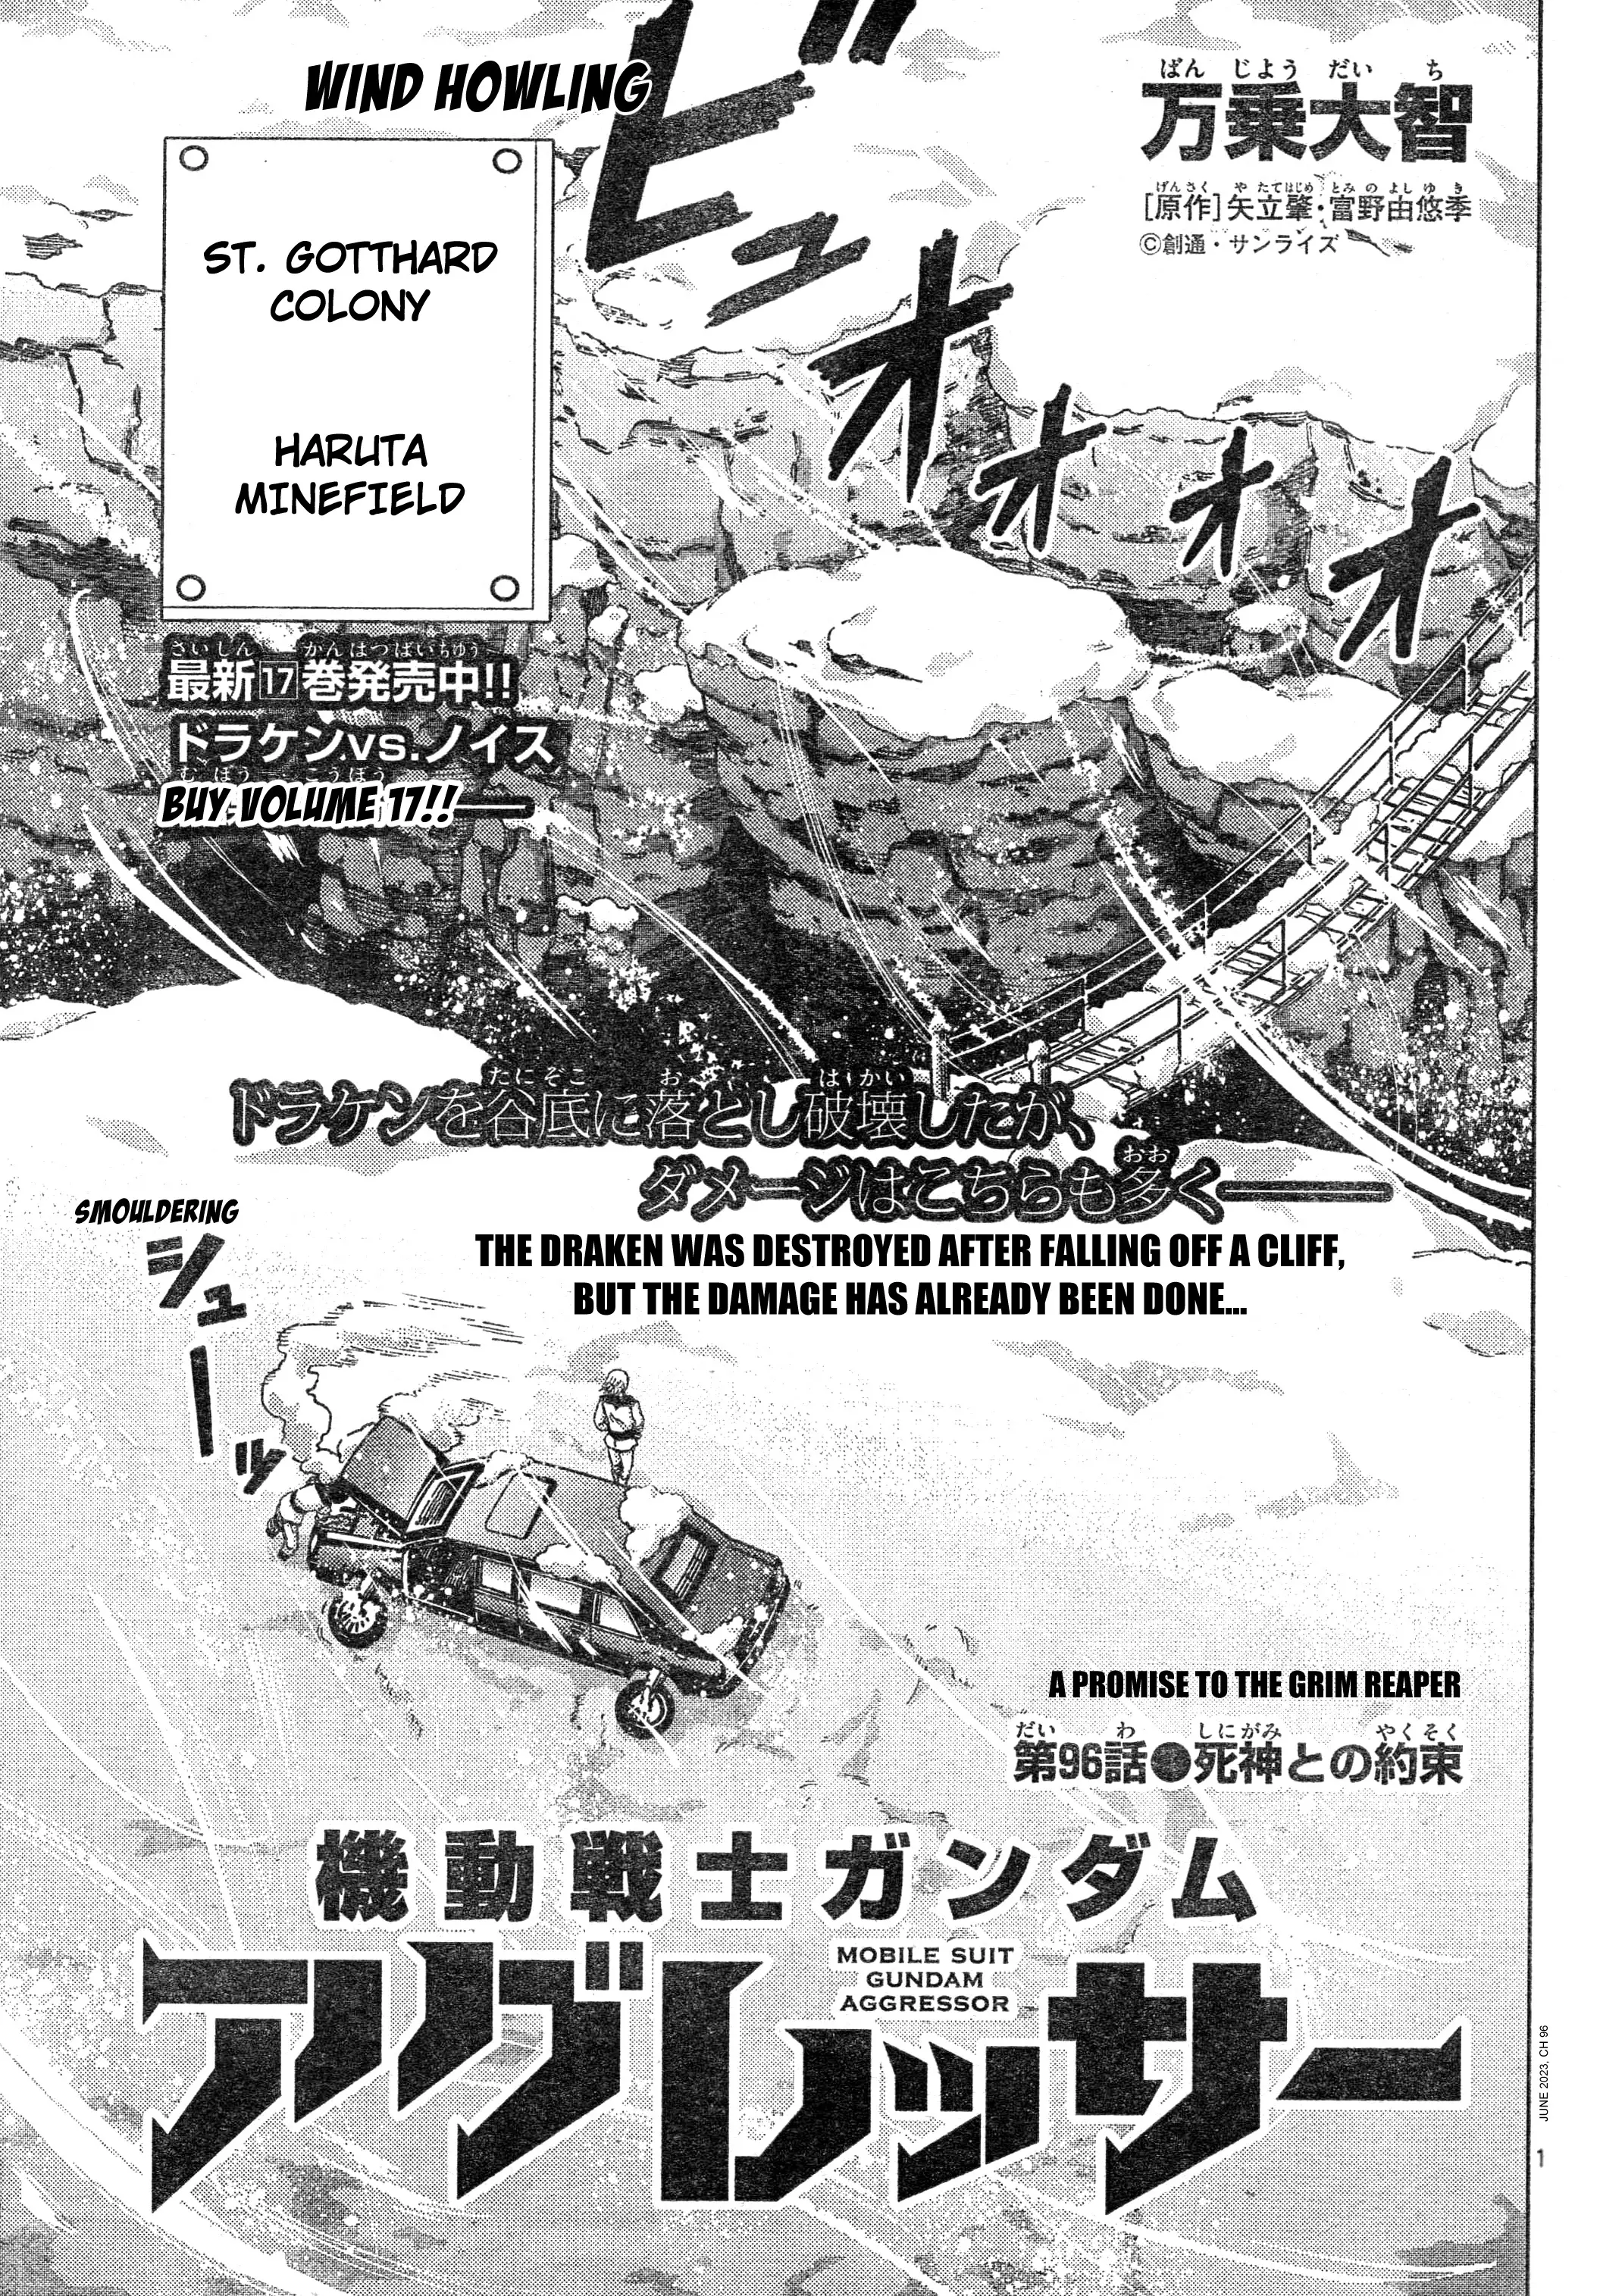 Mobile Suit Gundam Aggressor - 96 page 1-0964ae7b